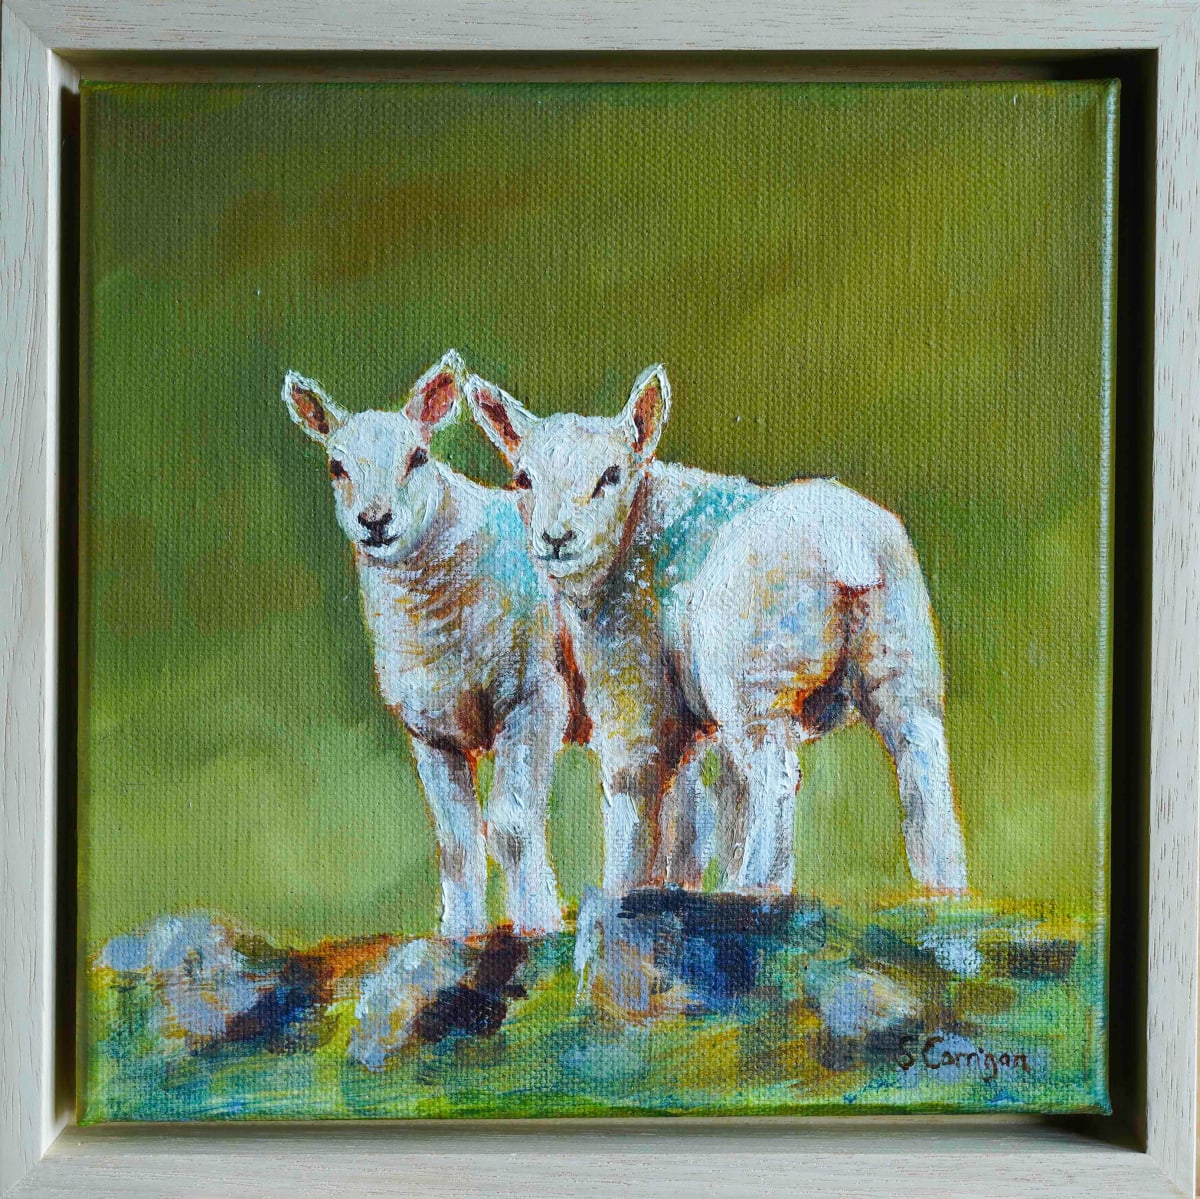 Ingram Lambs (ii) by Sarah Corrigan 